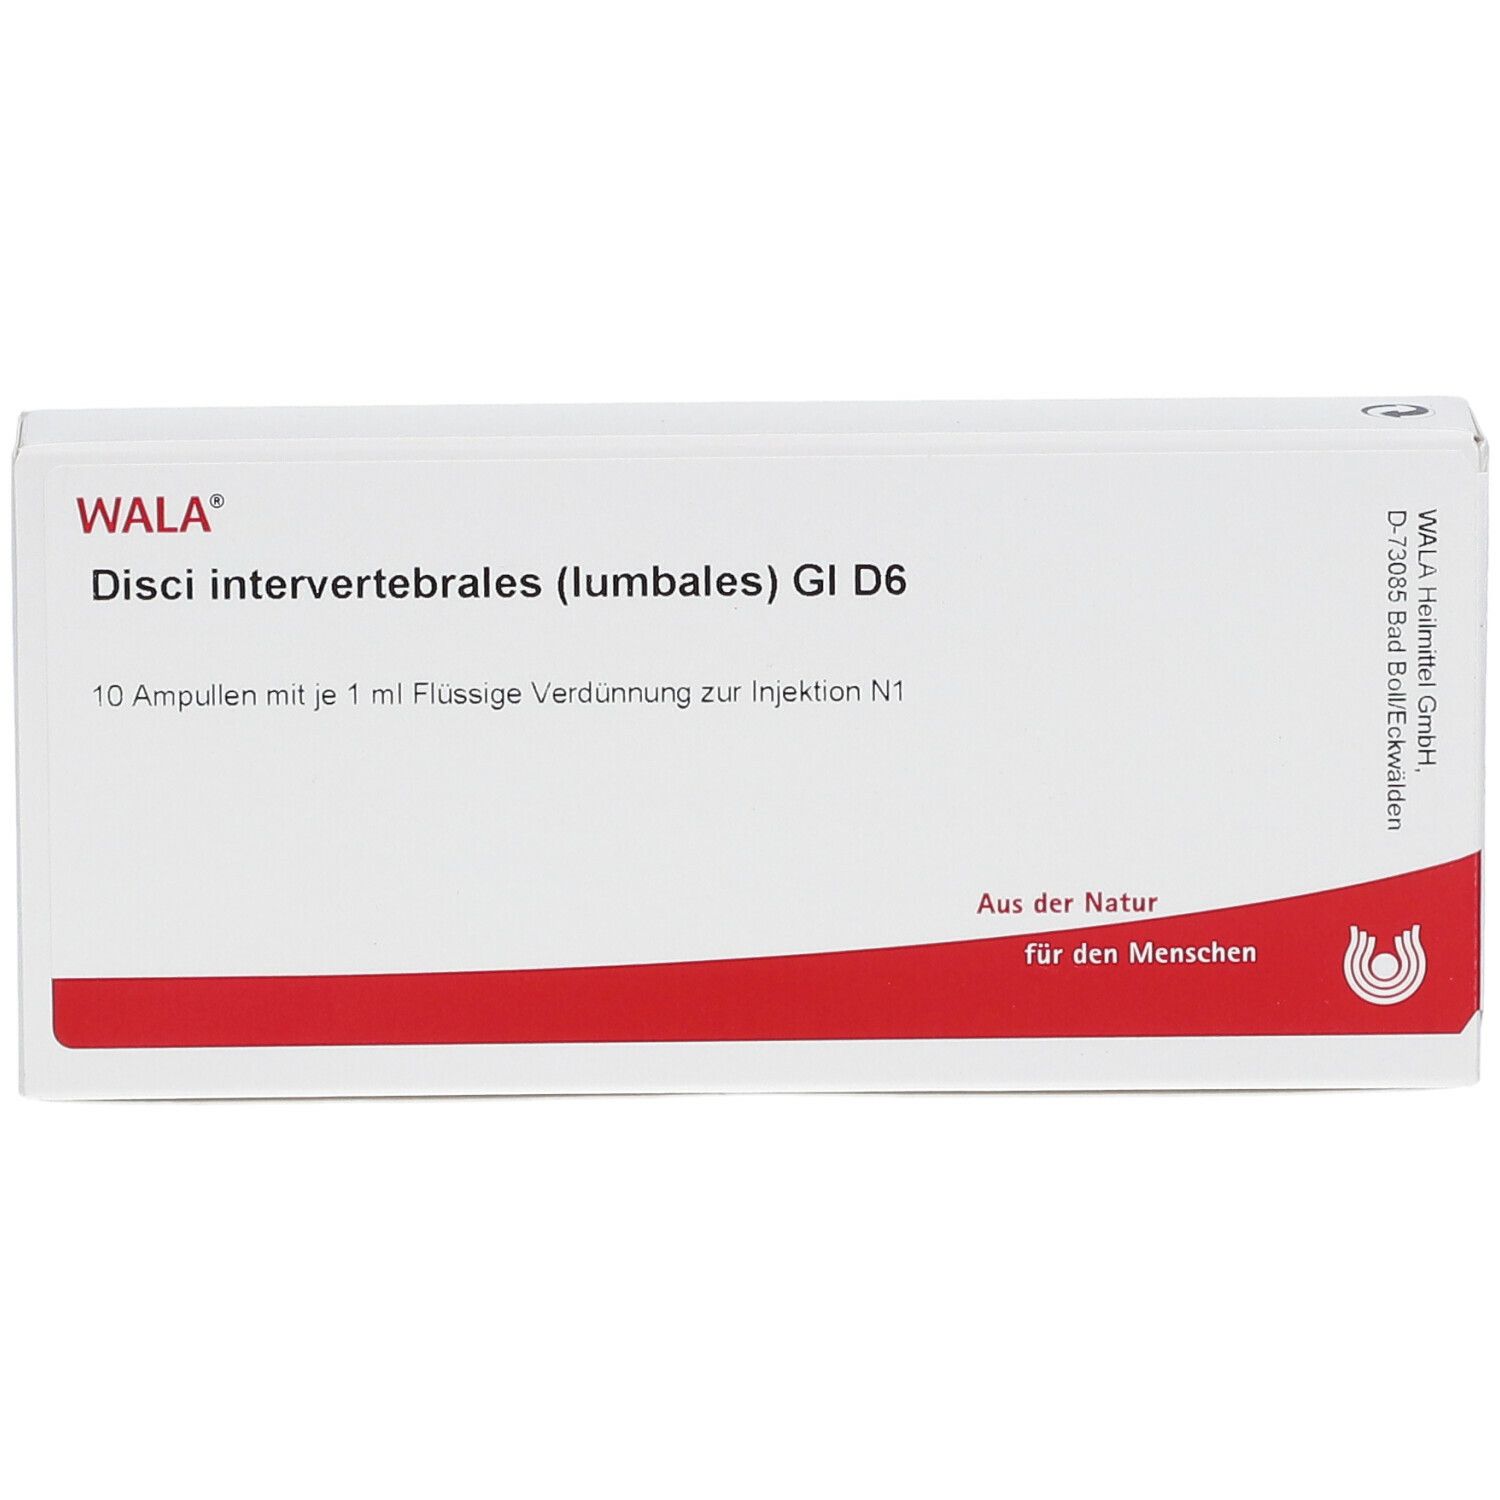 WALA® Disci intervertebrales lumbales Gl D 6